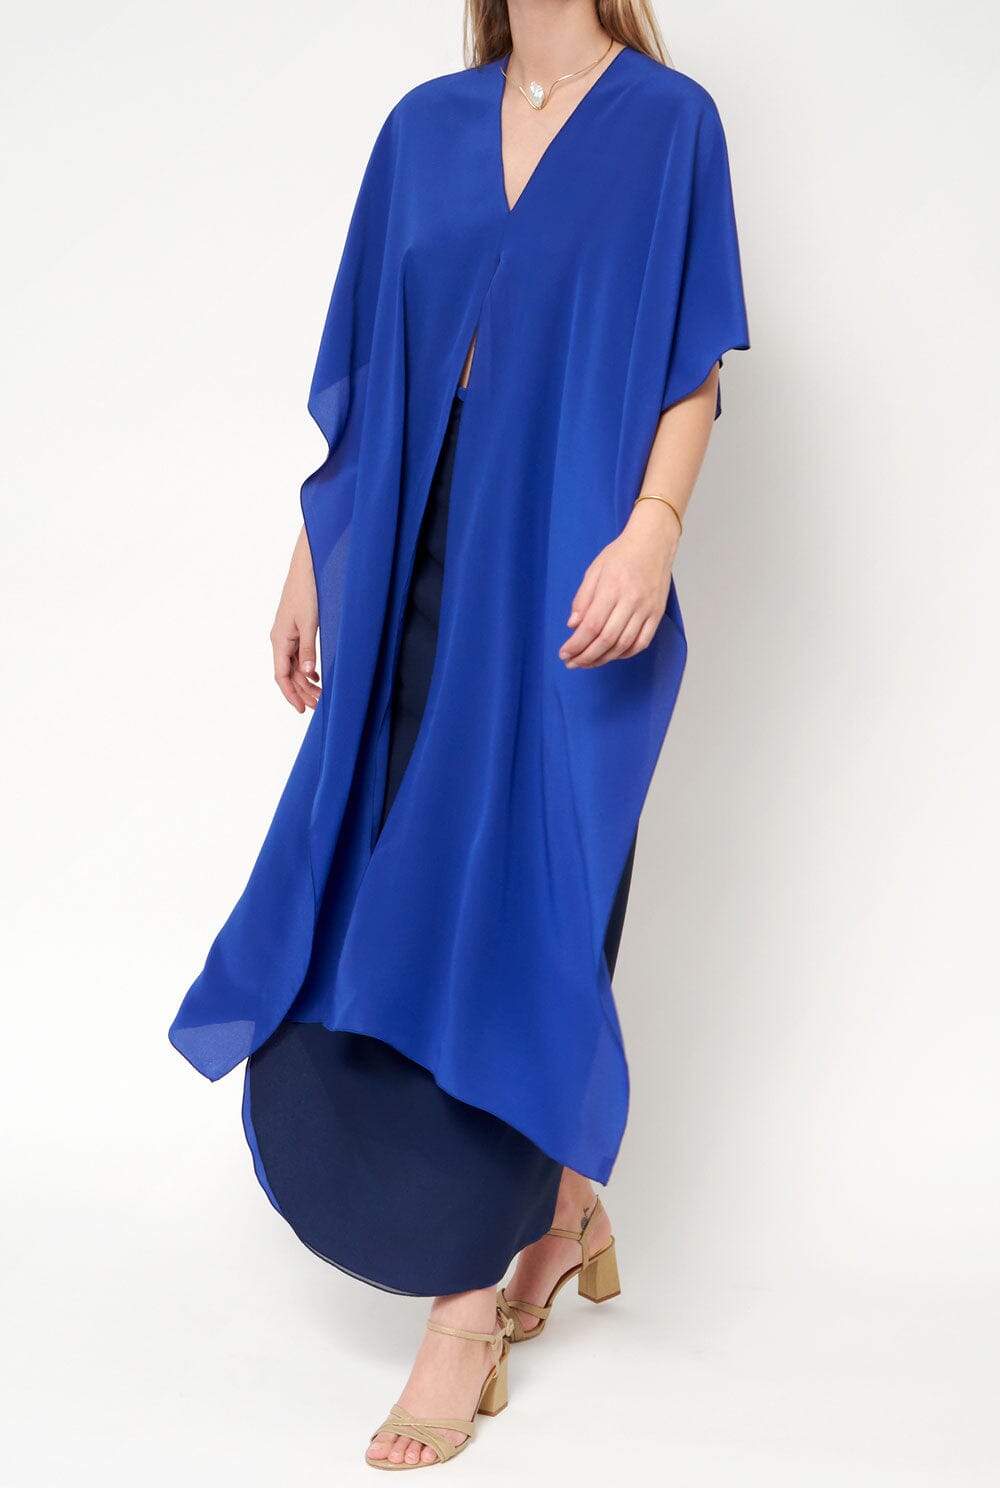 Olga Cape Blue Capes & shawls Atelier Aletheia 